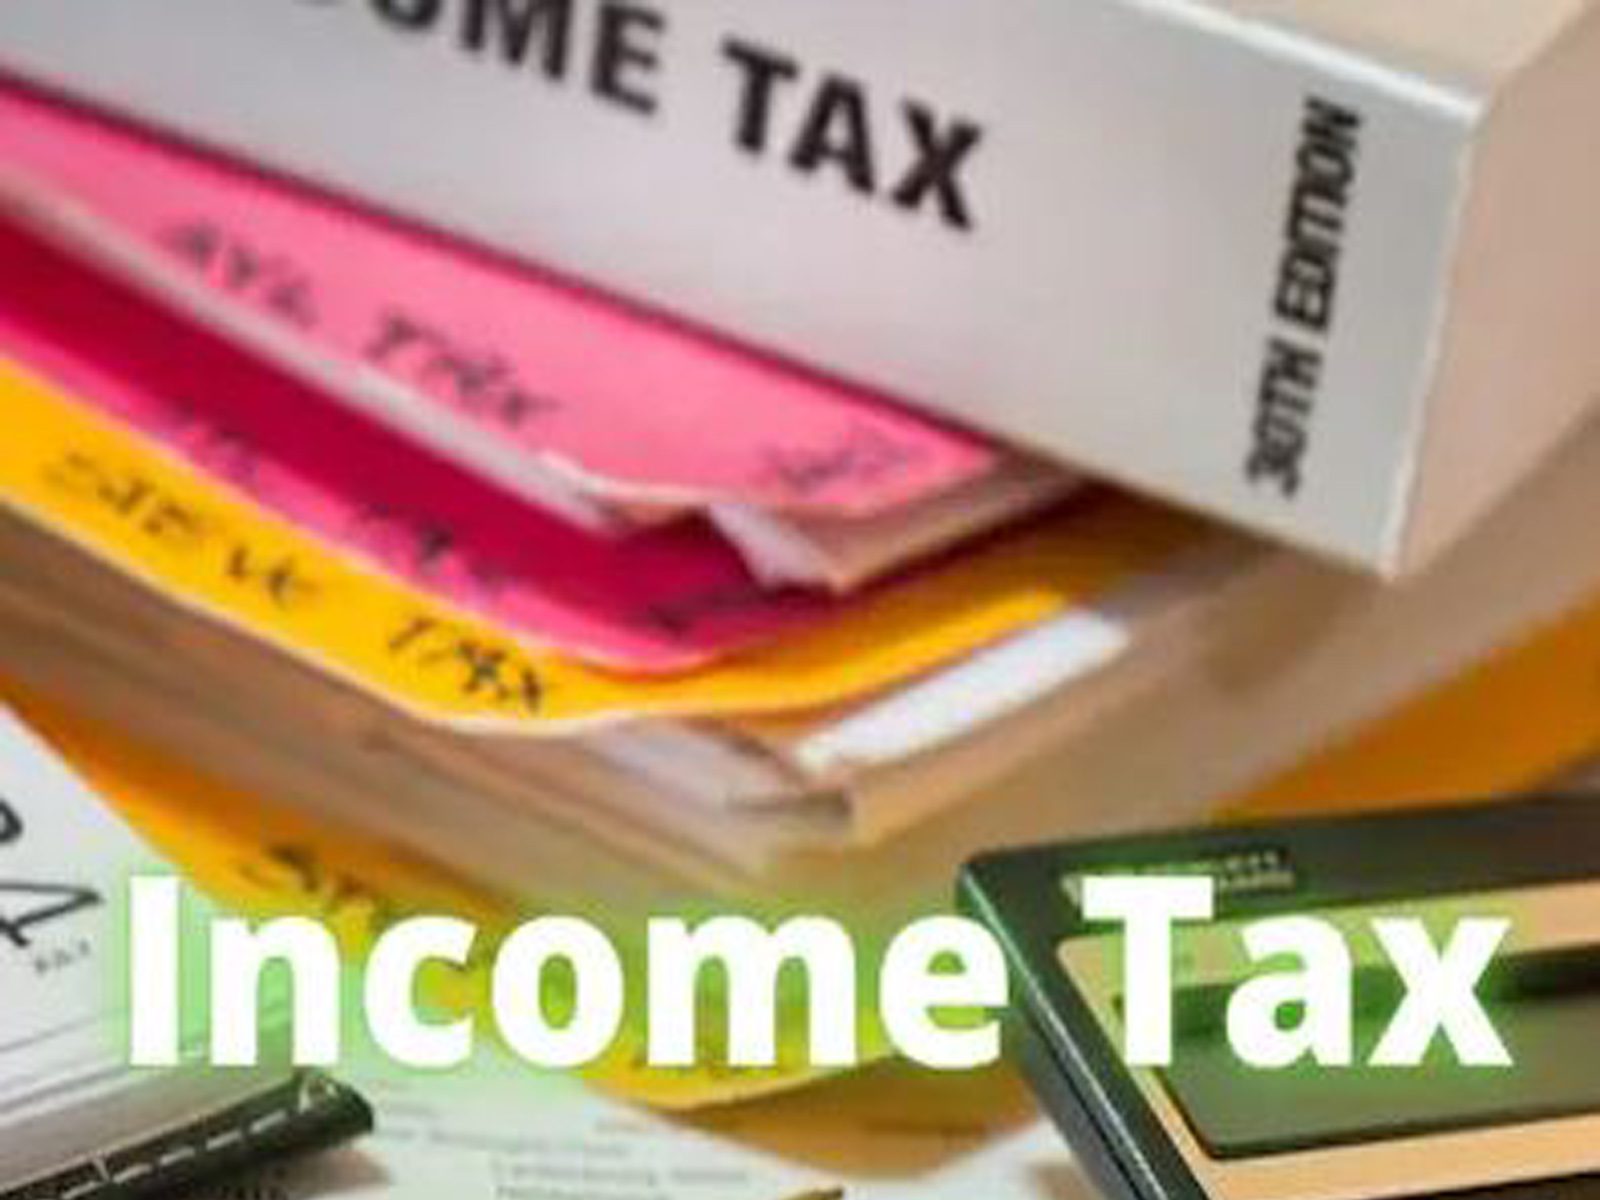 Income Tax Refund: ਇਨਕਮ ਟੈਕਸ ਵਿਭਾਗ (Income Tax Department) ਨੇ ਚਾਲੂ ਵਿੱਤੀ ਸਾਲ (2021-22) ਵਿੱਚ 13 ਦਸੰਬਰ ਤੱਕ 1.27 ਕਰੋੜ ਤੋਂ ਵੱਧ ਕਰਦਾਤਿਆਂ ਨੂੰ 1,36,779 ਕਰੋੜ ਰੁਪਏ ਤੋਂ ਵੱਧ ਦਾ ਰਿਫੰਡ ਕੀਤਾ ਹੈ।